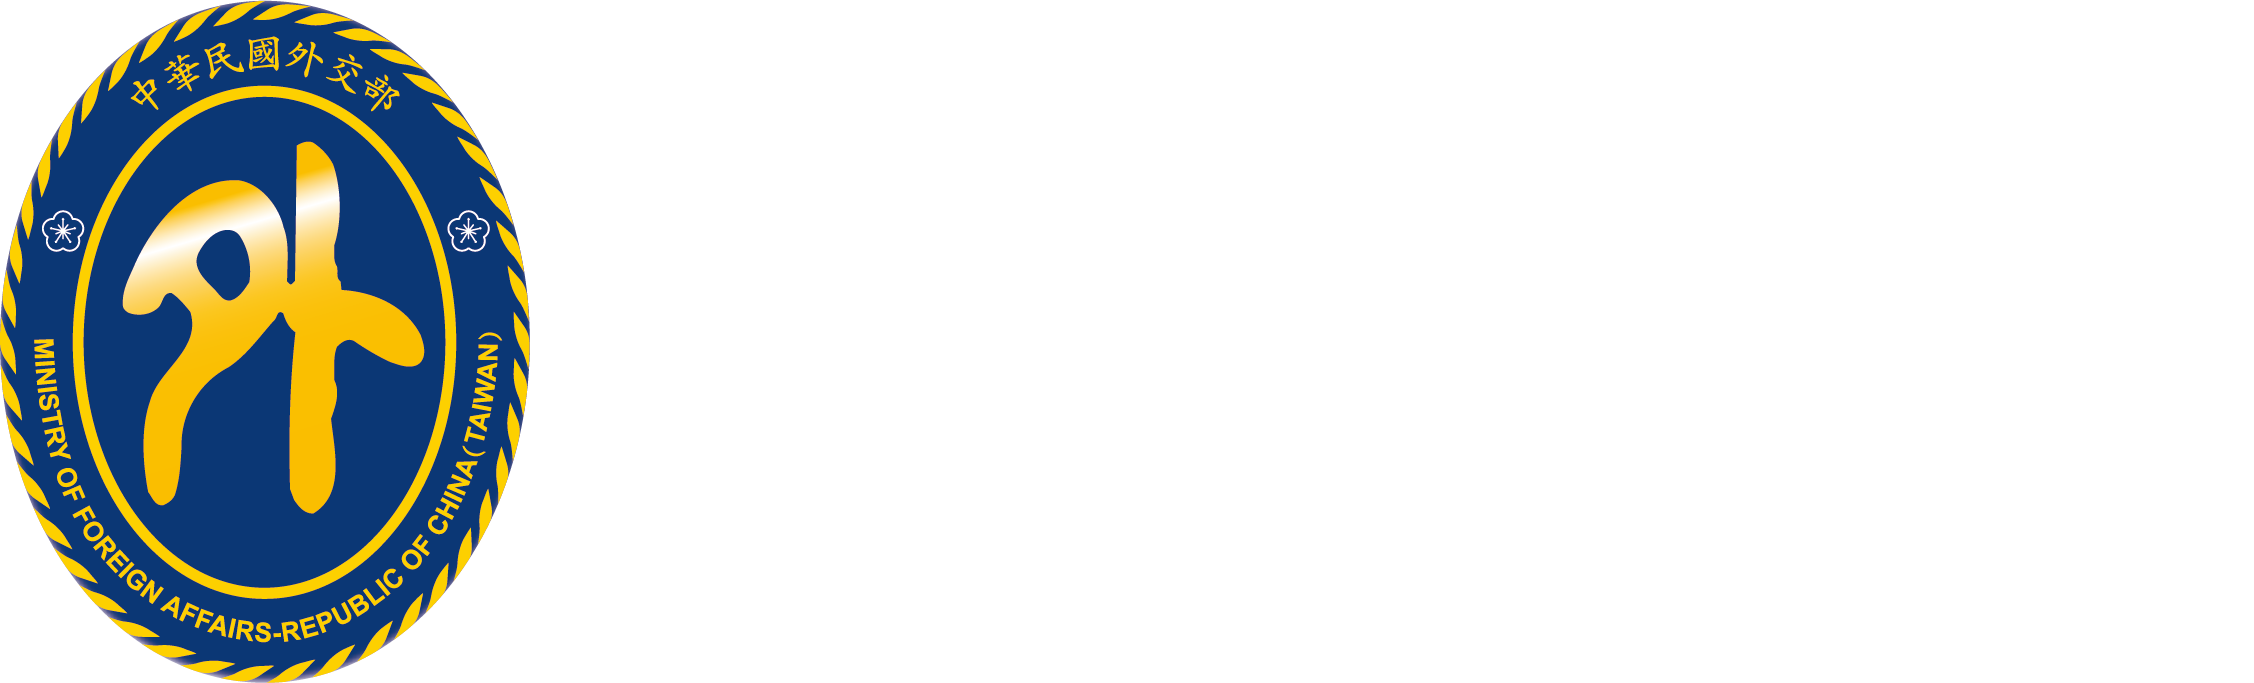 major logo